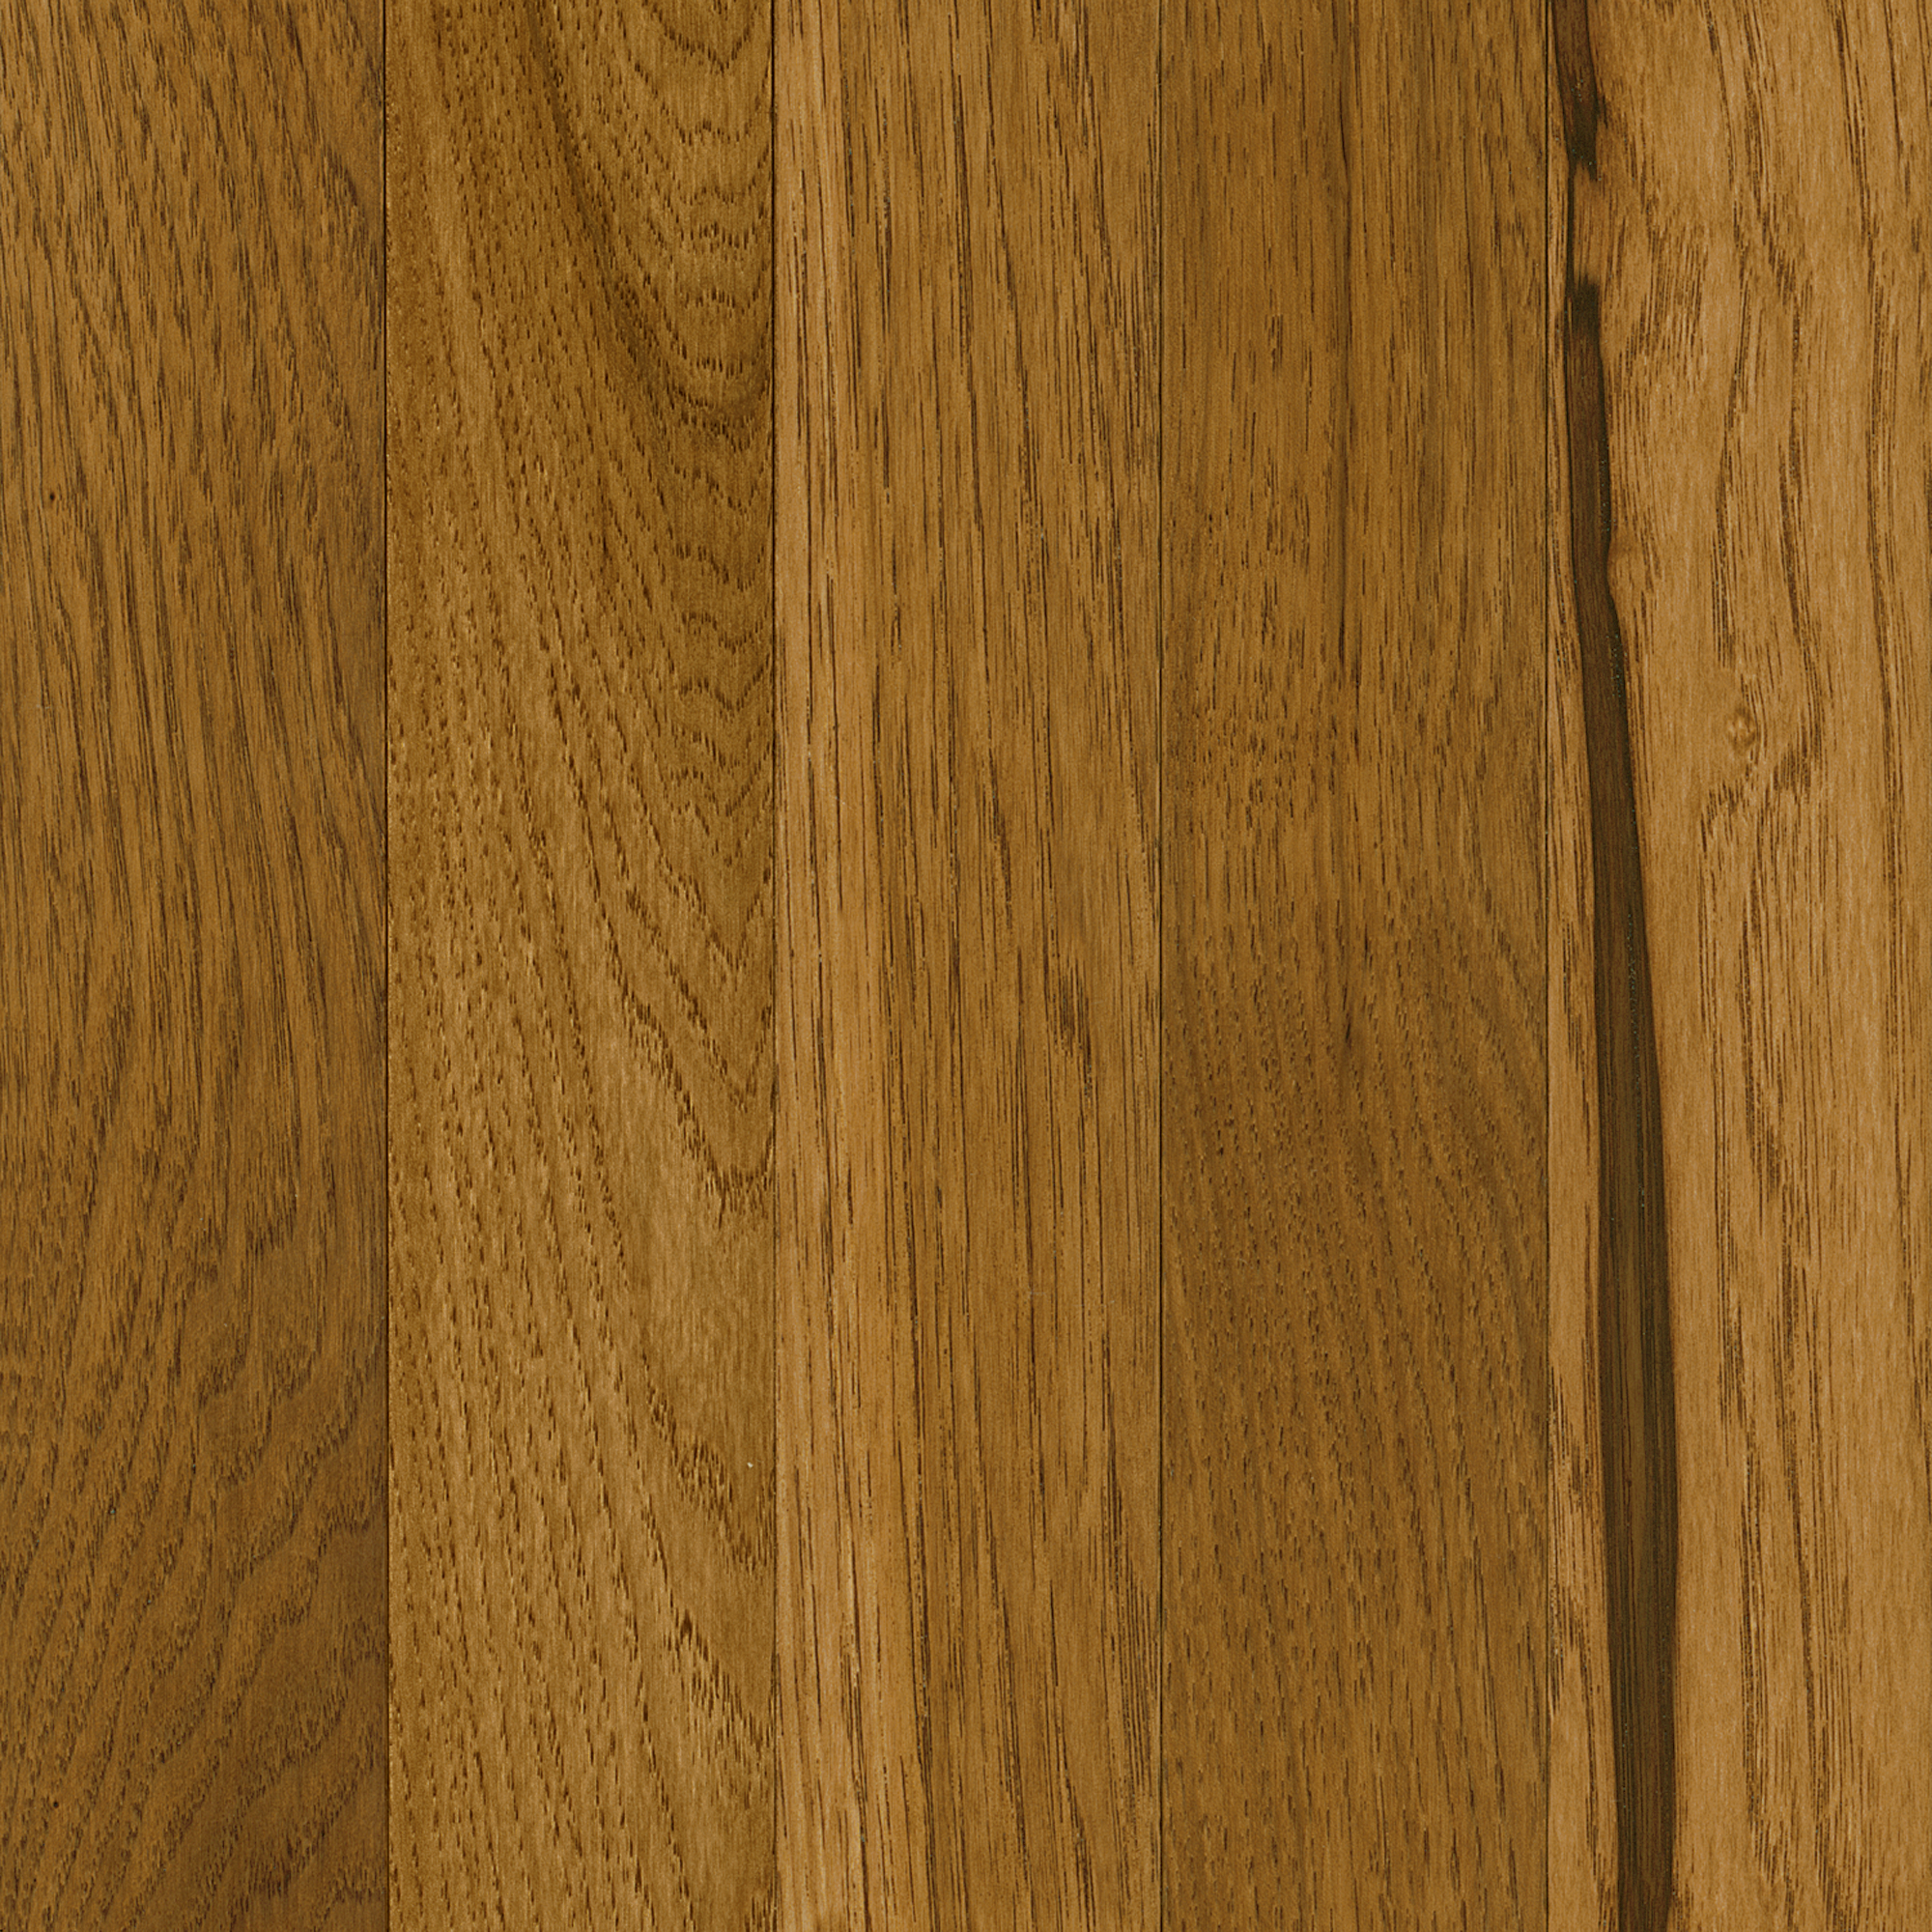 Hickory Solid Hardwood Aph5402, Sweet Hardwood Floors Inc